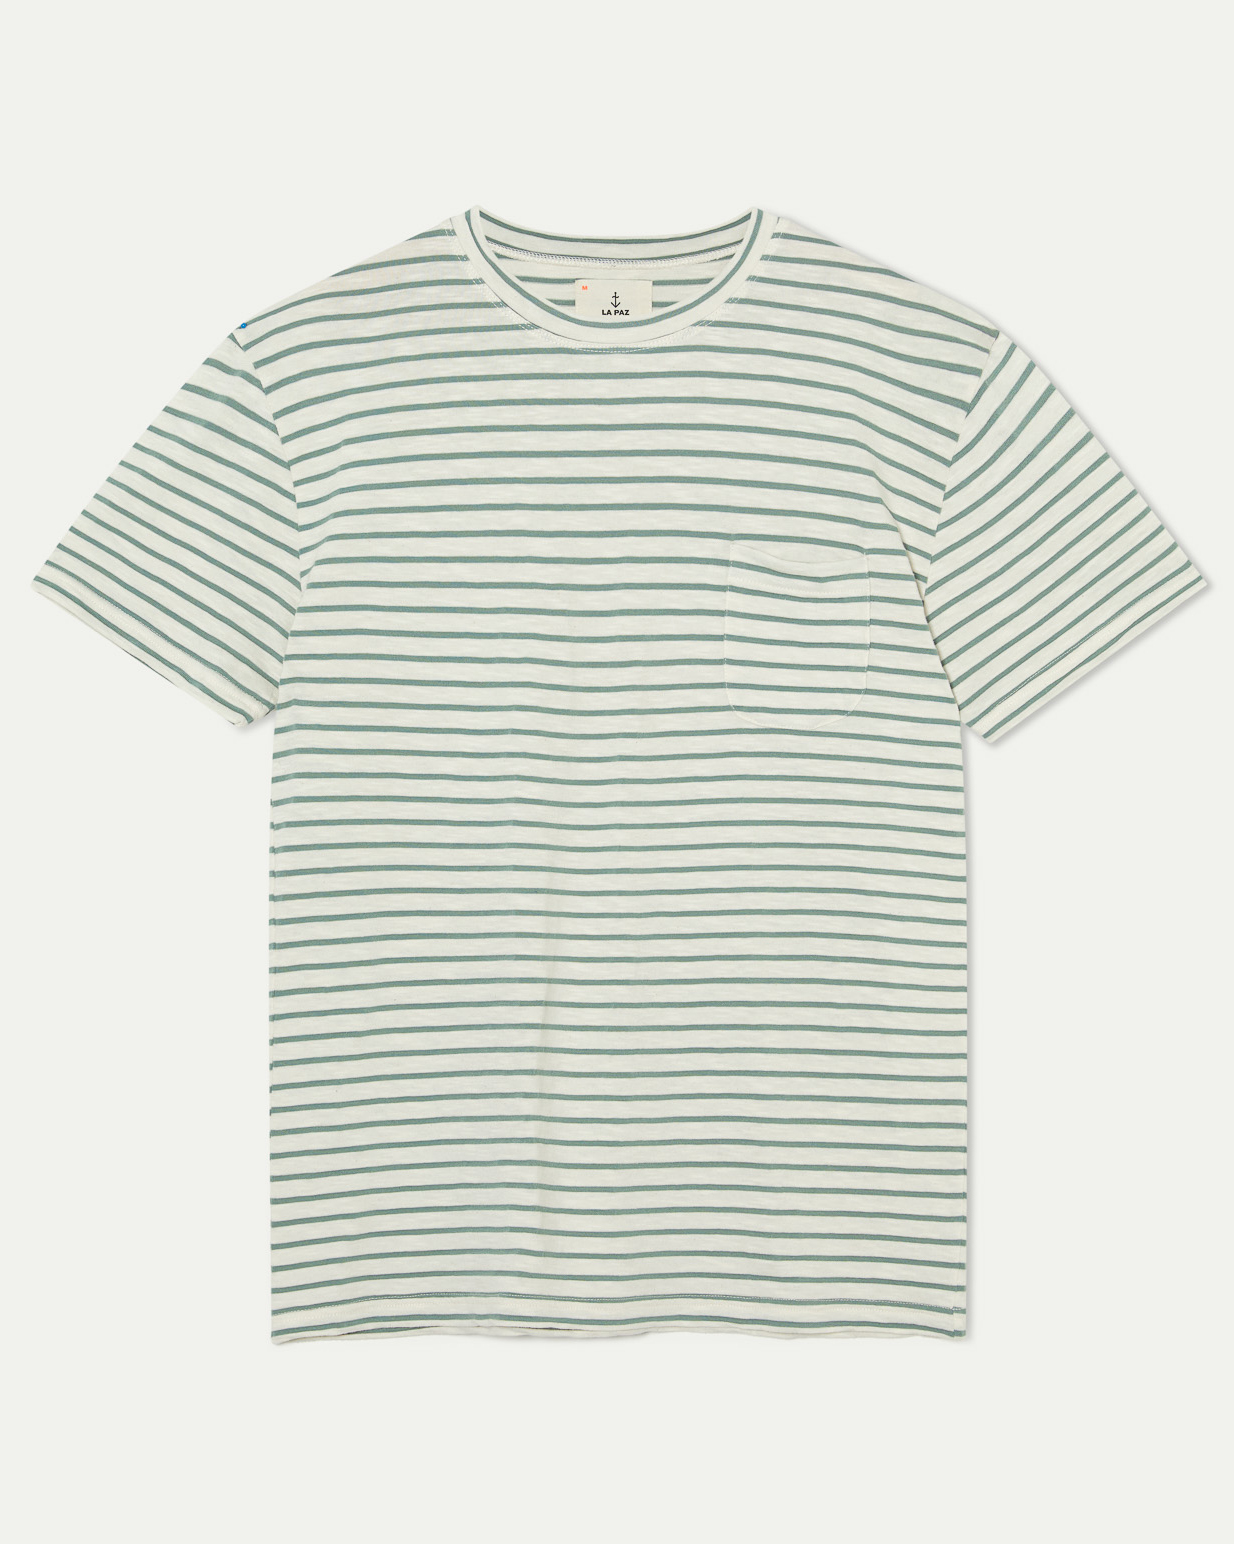 T-shirt Guerreiro Pocket - Green Bay Stripes - M